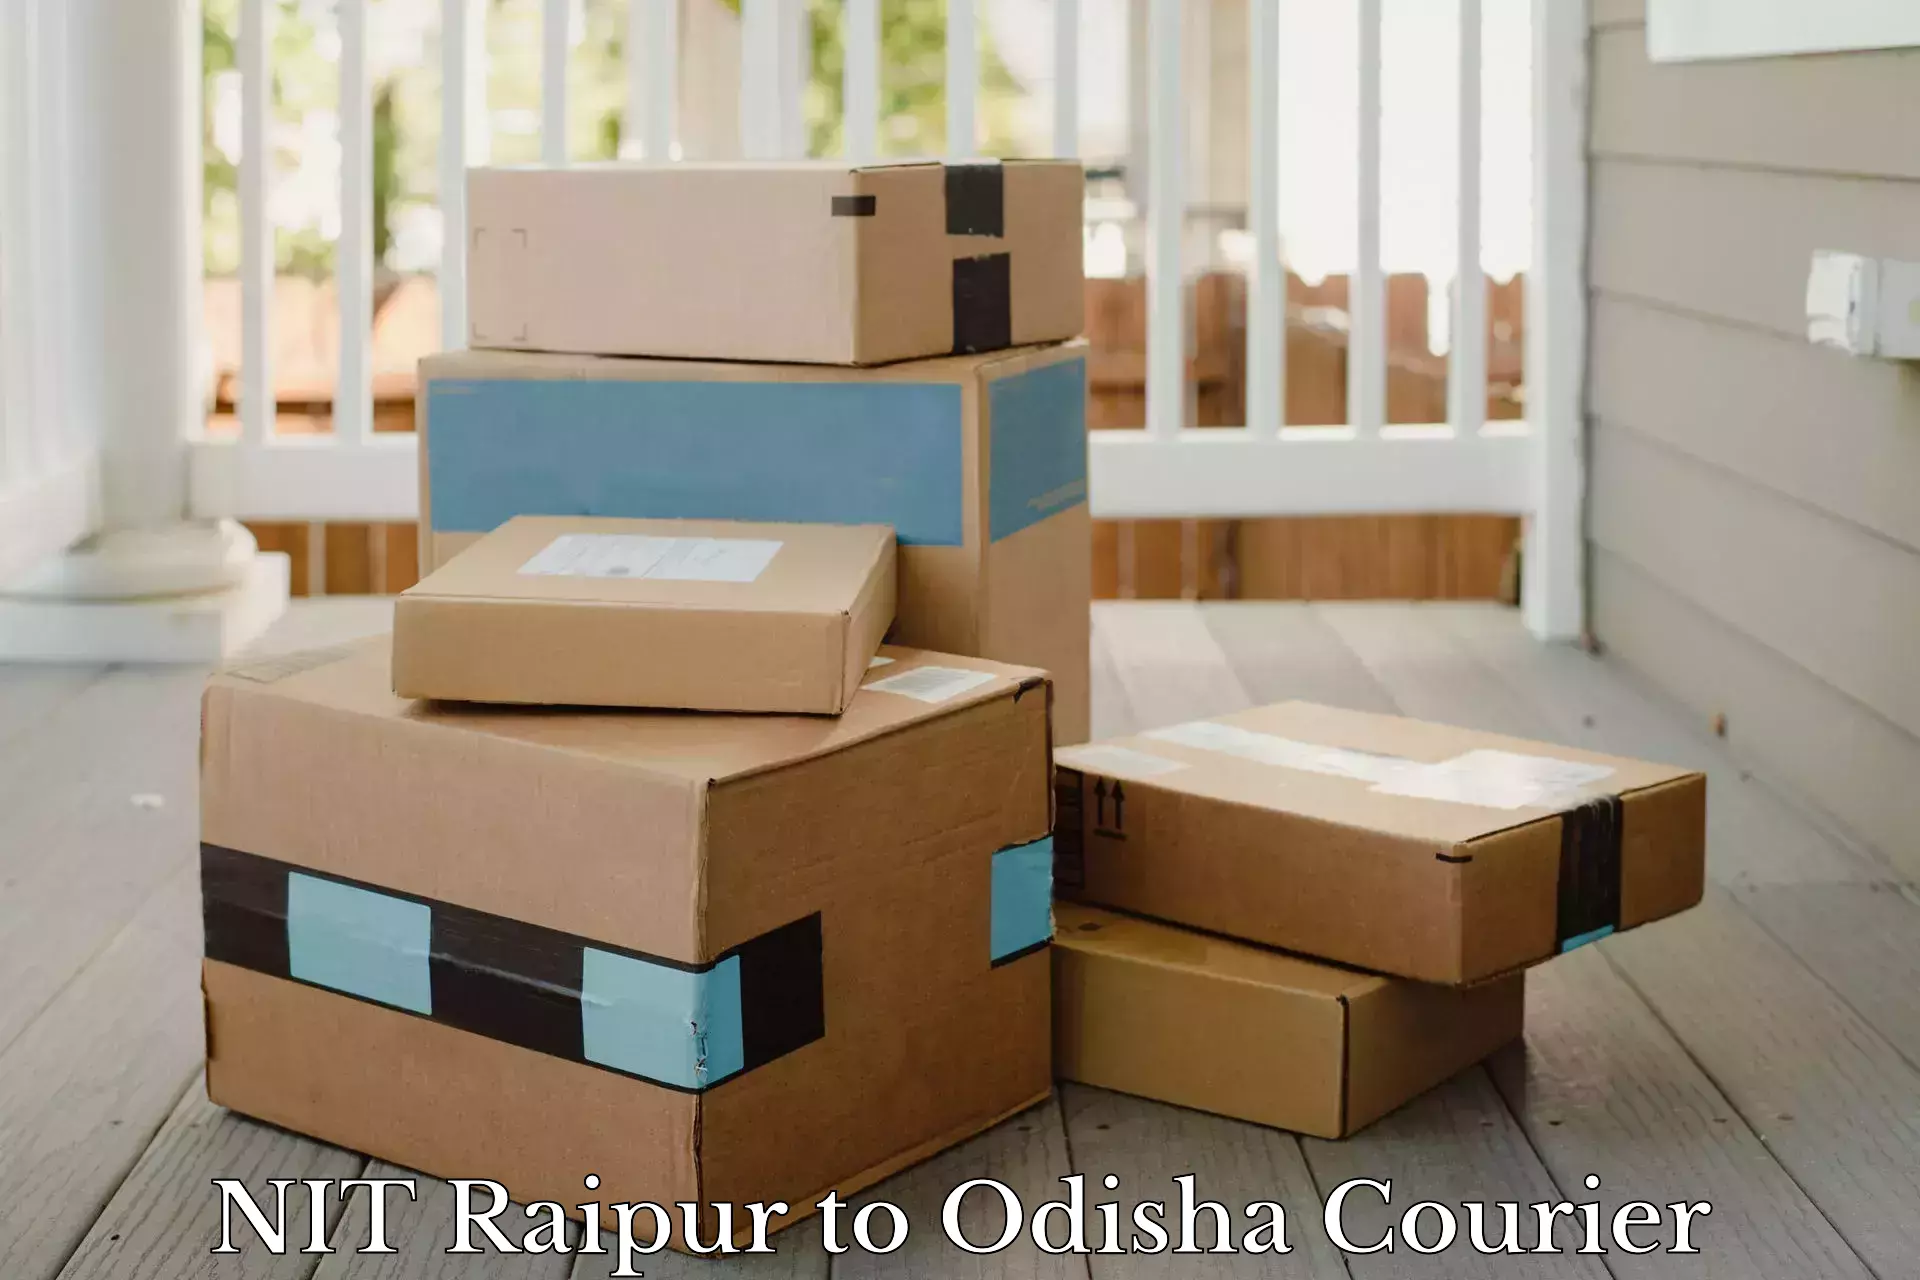 Ocean freight courier NIT Raipur to Odisha